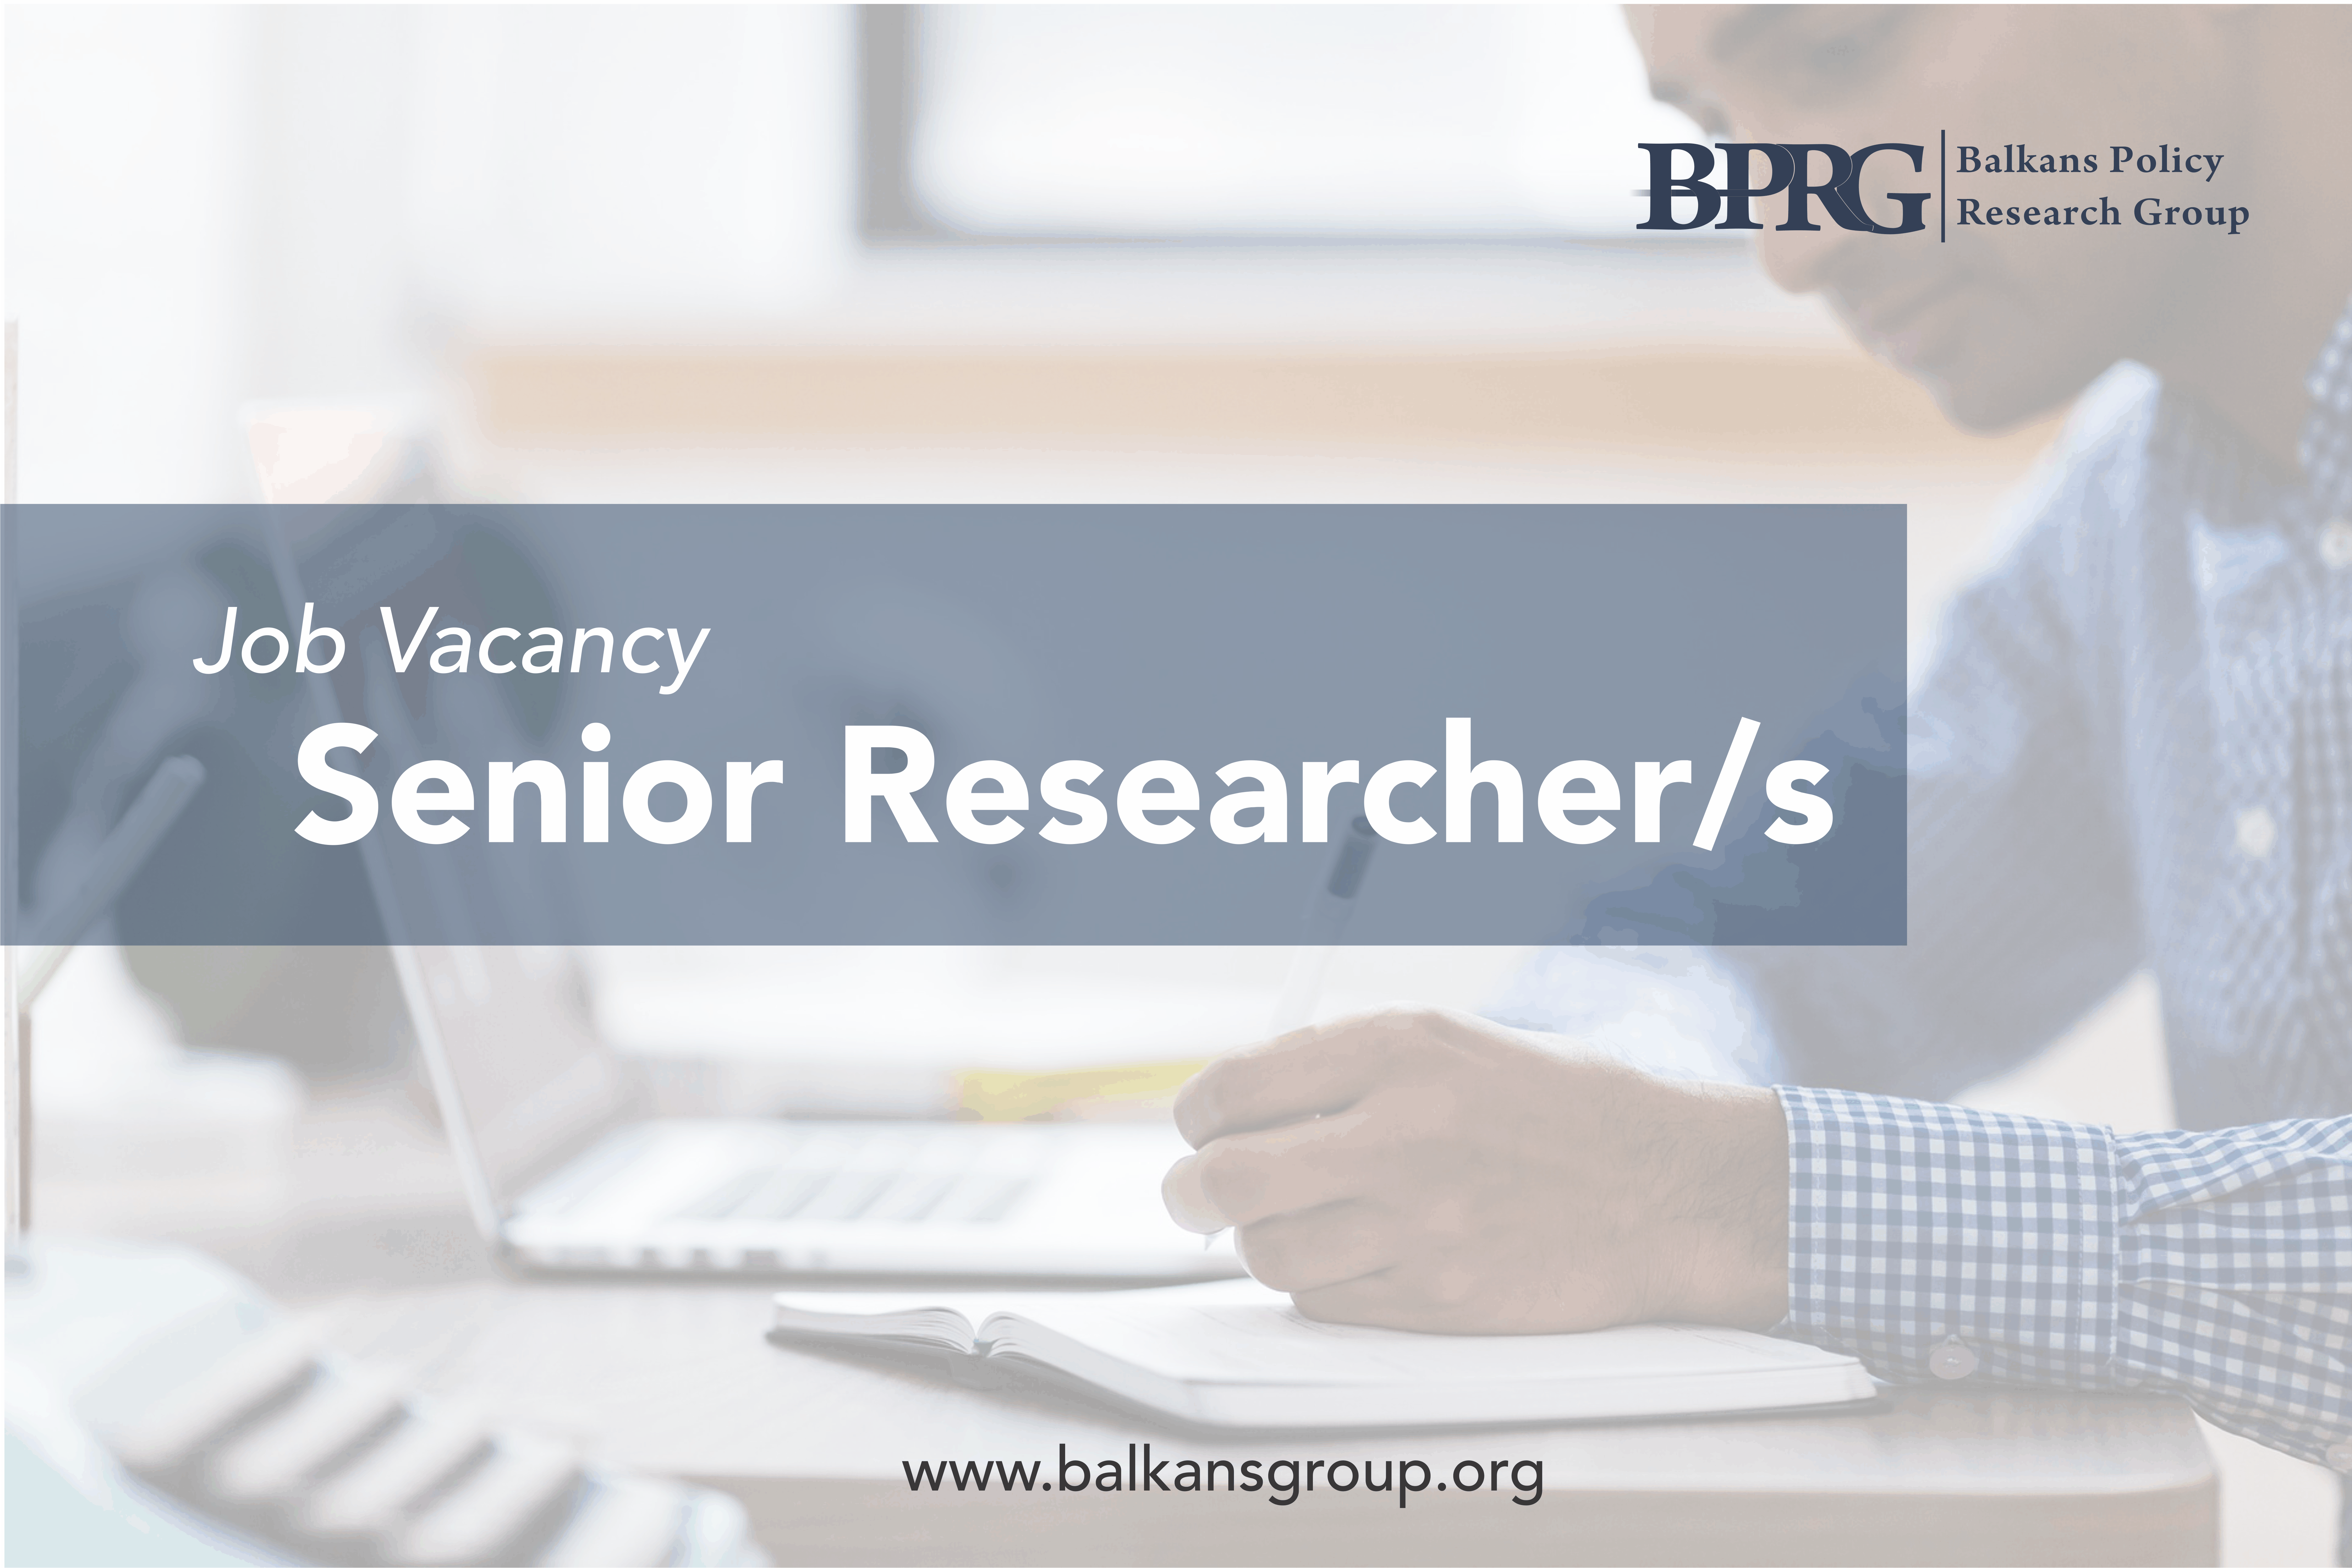 Job Vacancy – Senior Researcher/s